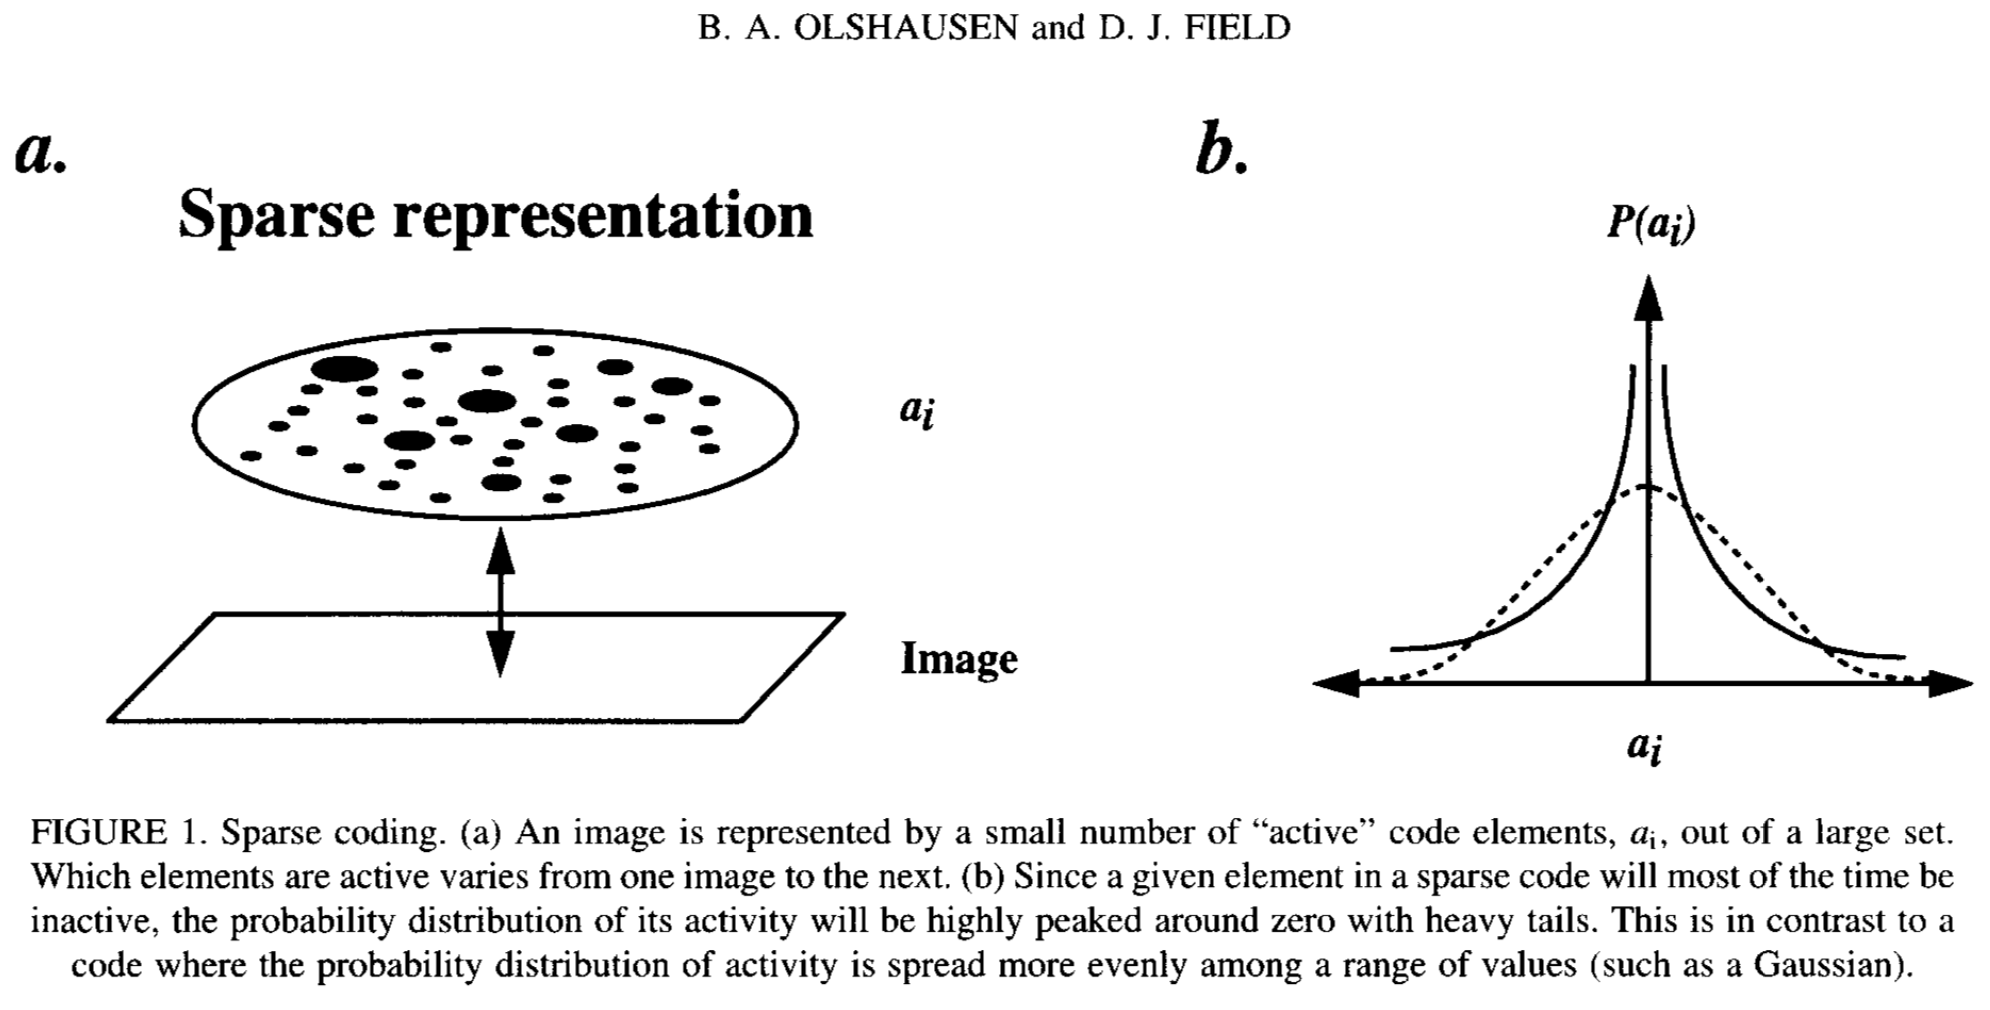 [[Olshausen and Field (1997)](http://mplab.ucsd.edu/~marni/Igert/Olshaussen_1997.pdf)]